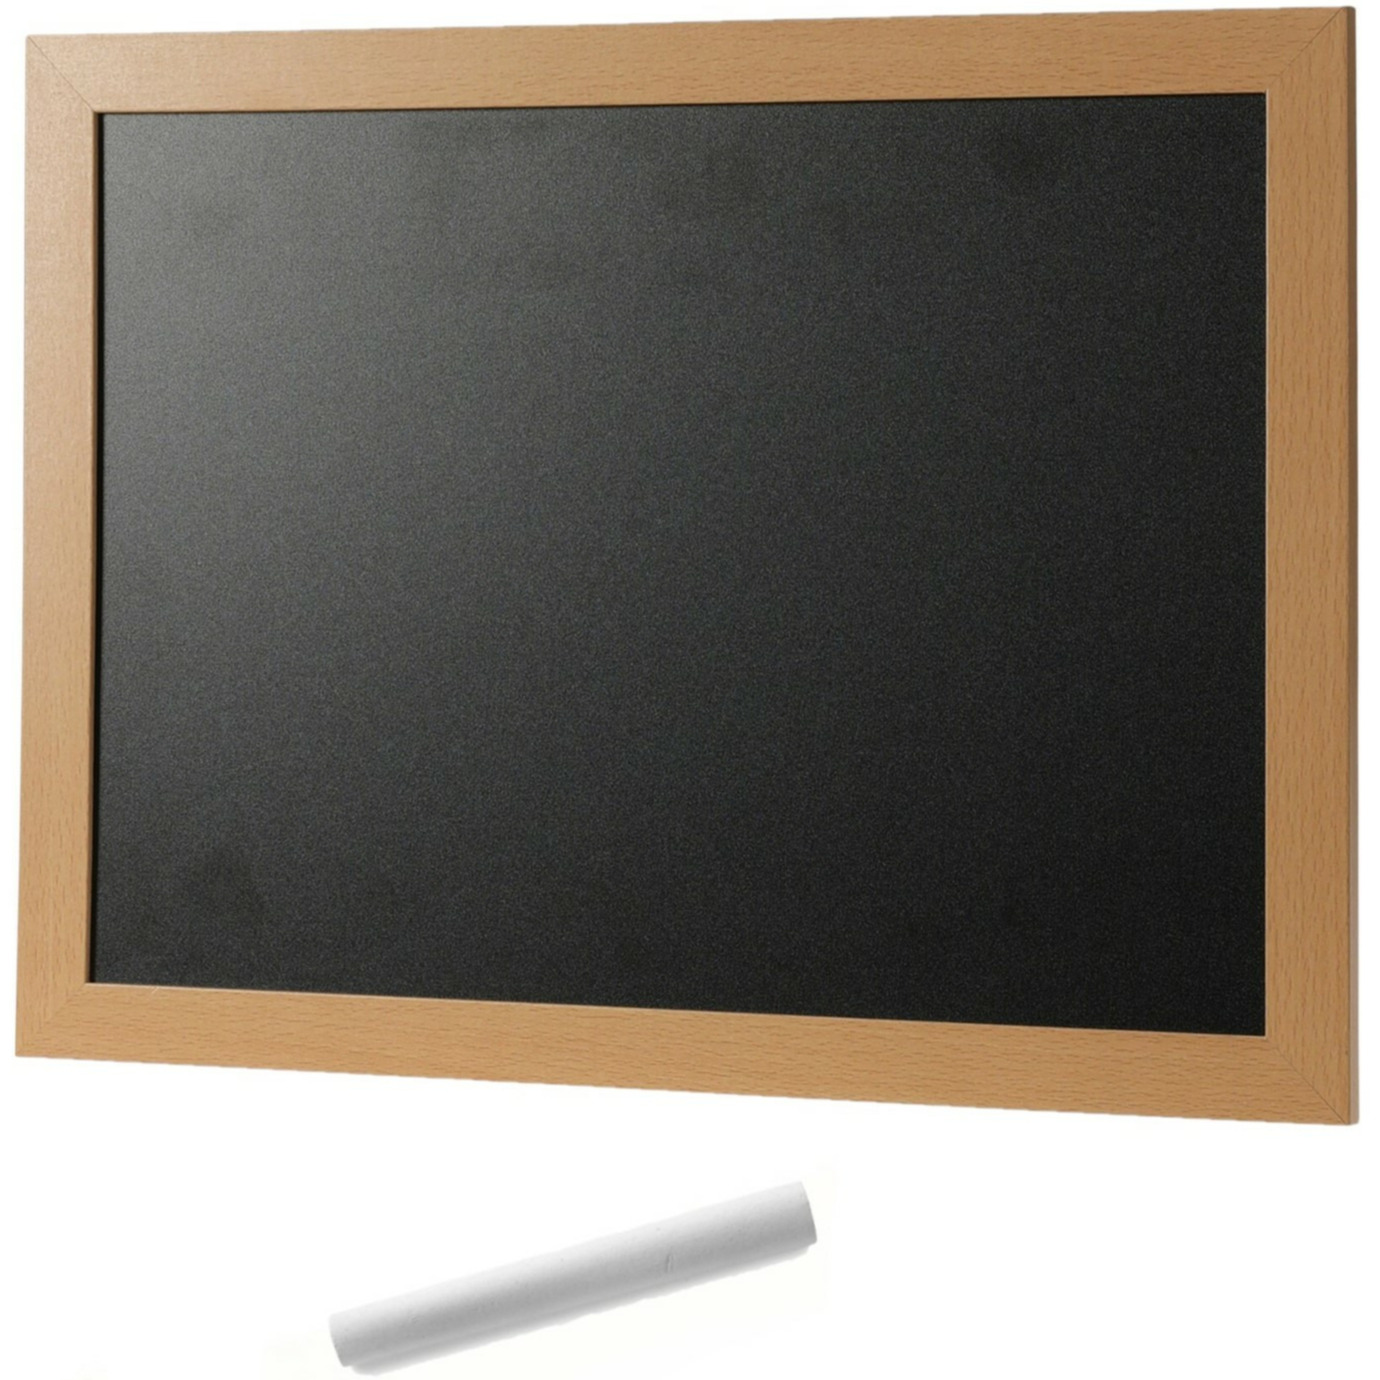 Schoolbord-krijtbord incl. krijtje 30 x 40 cm